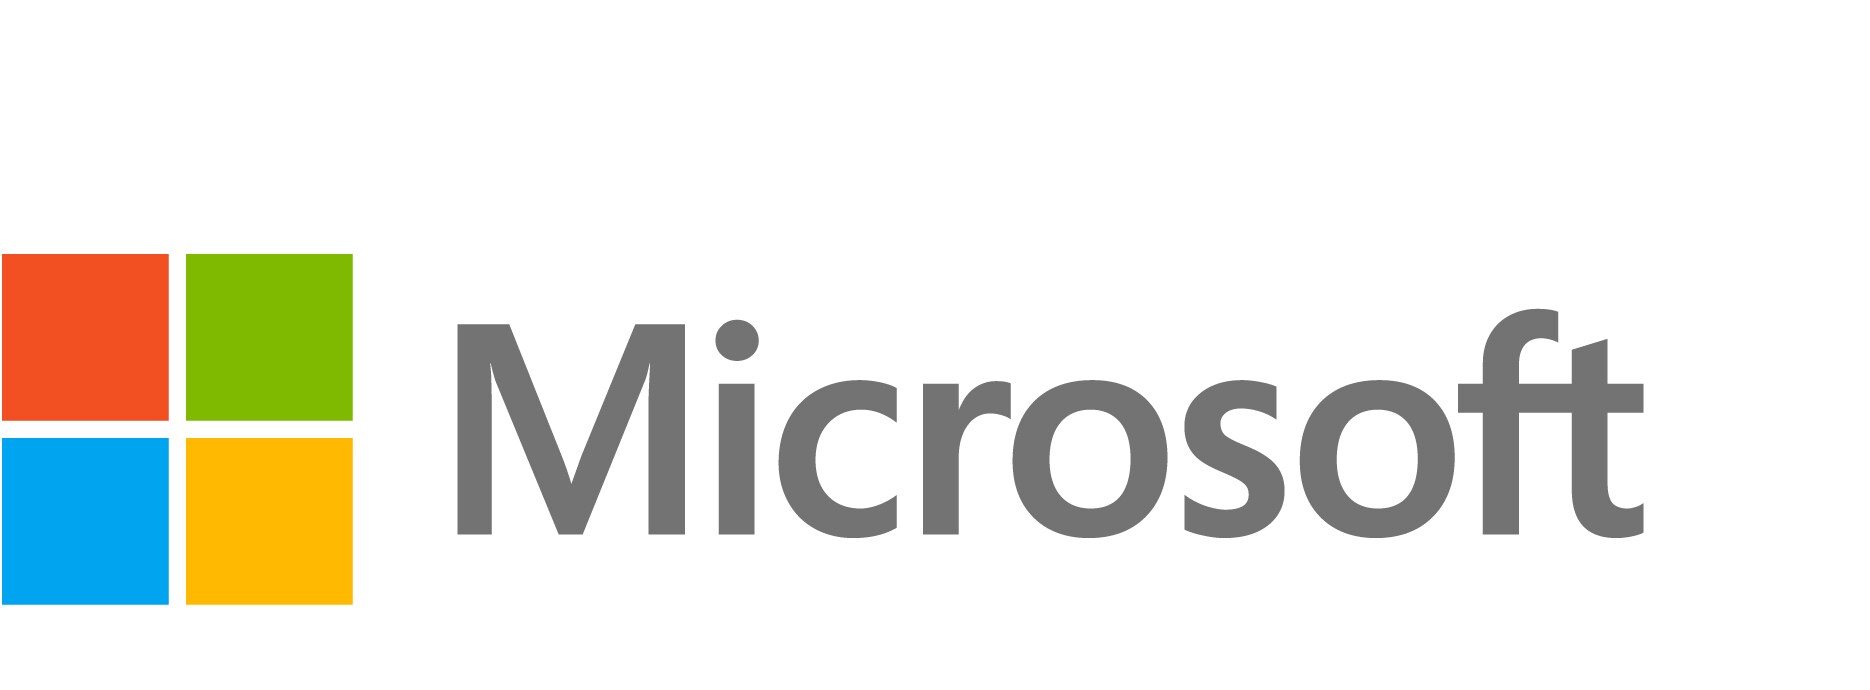 Microsoft Visual Studio Enterprise with MSDN - software assurance - 1 licen